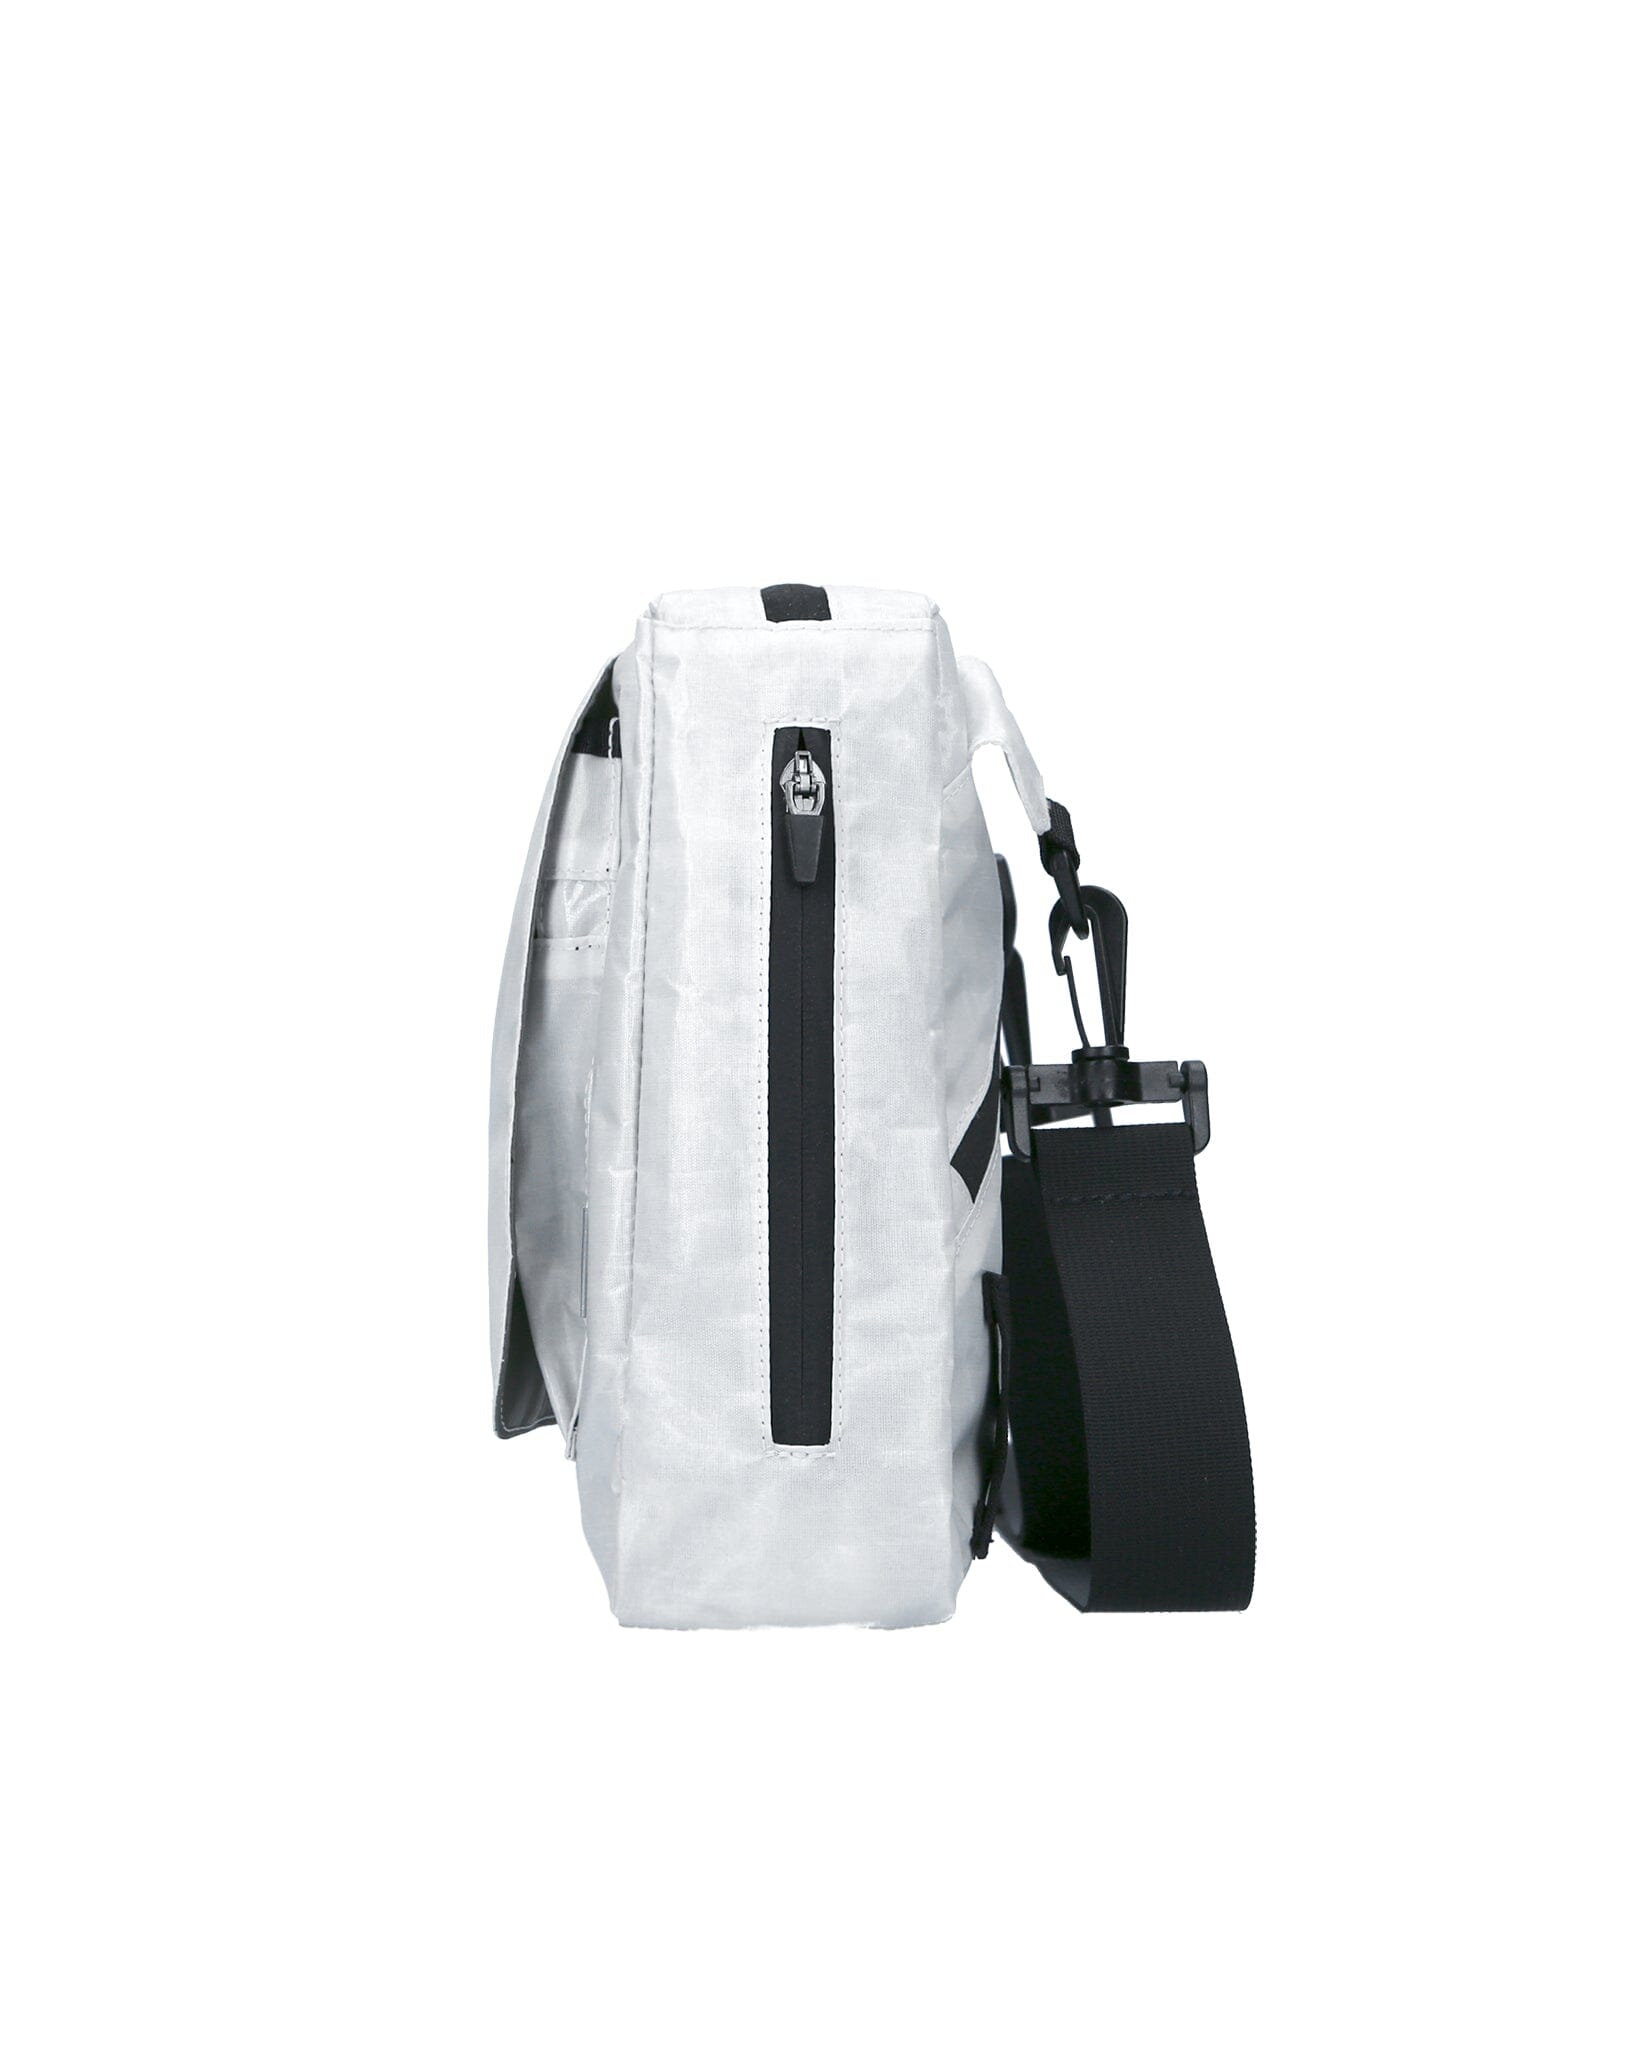 Small Carry - White Dyneema Bag bolstr   